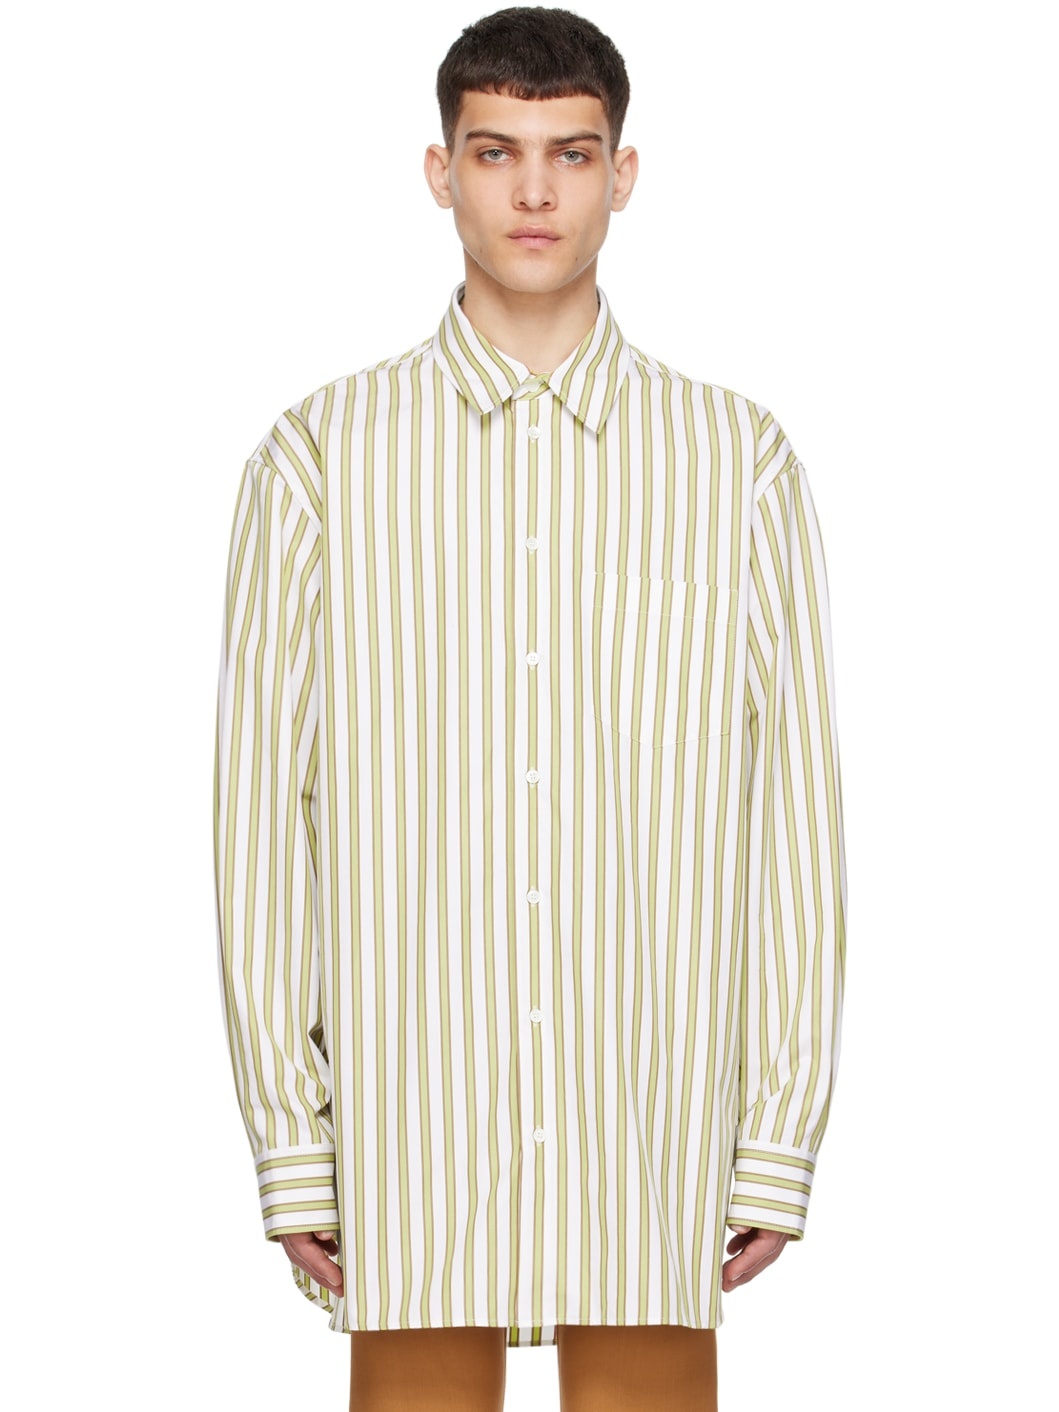 White & Yellow Striped Shirt - 1